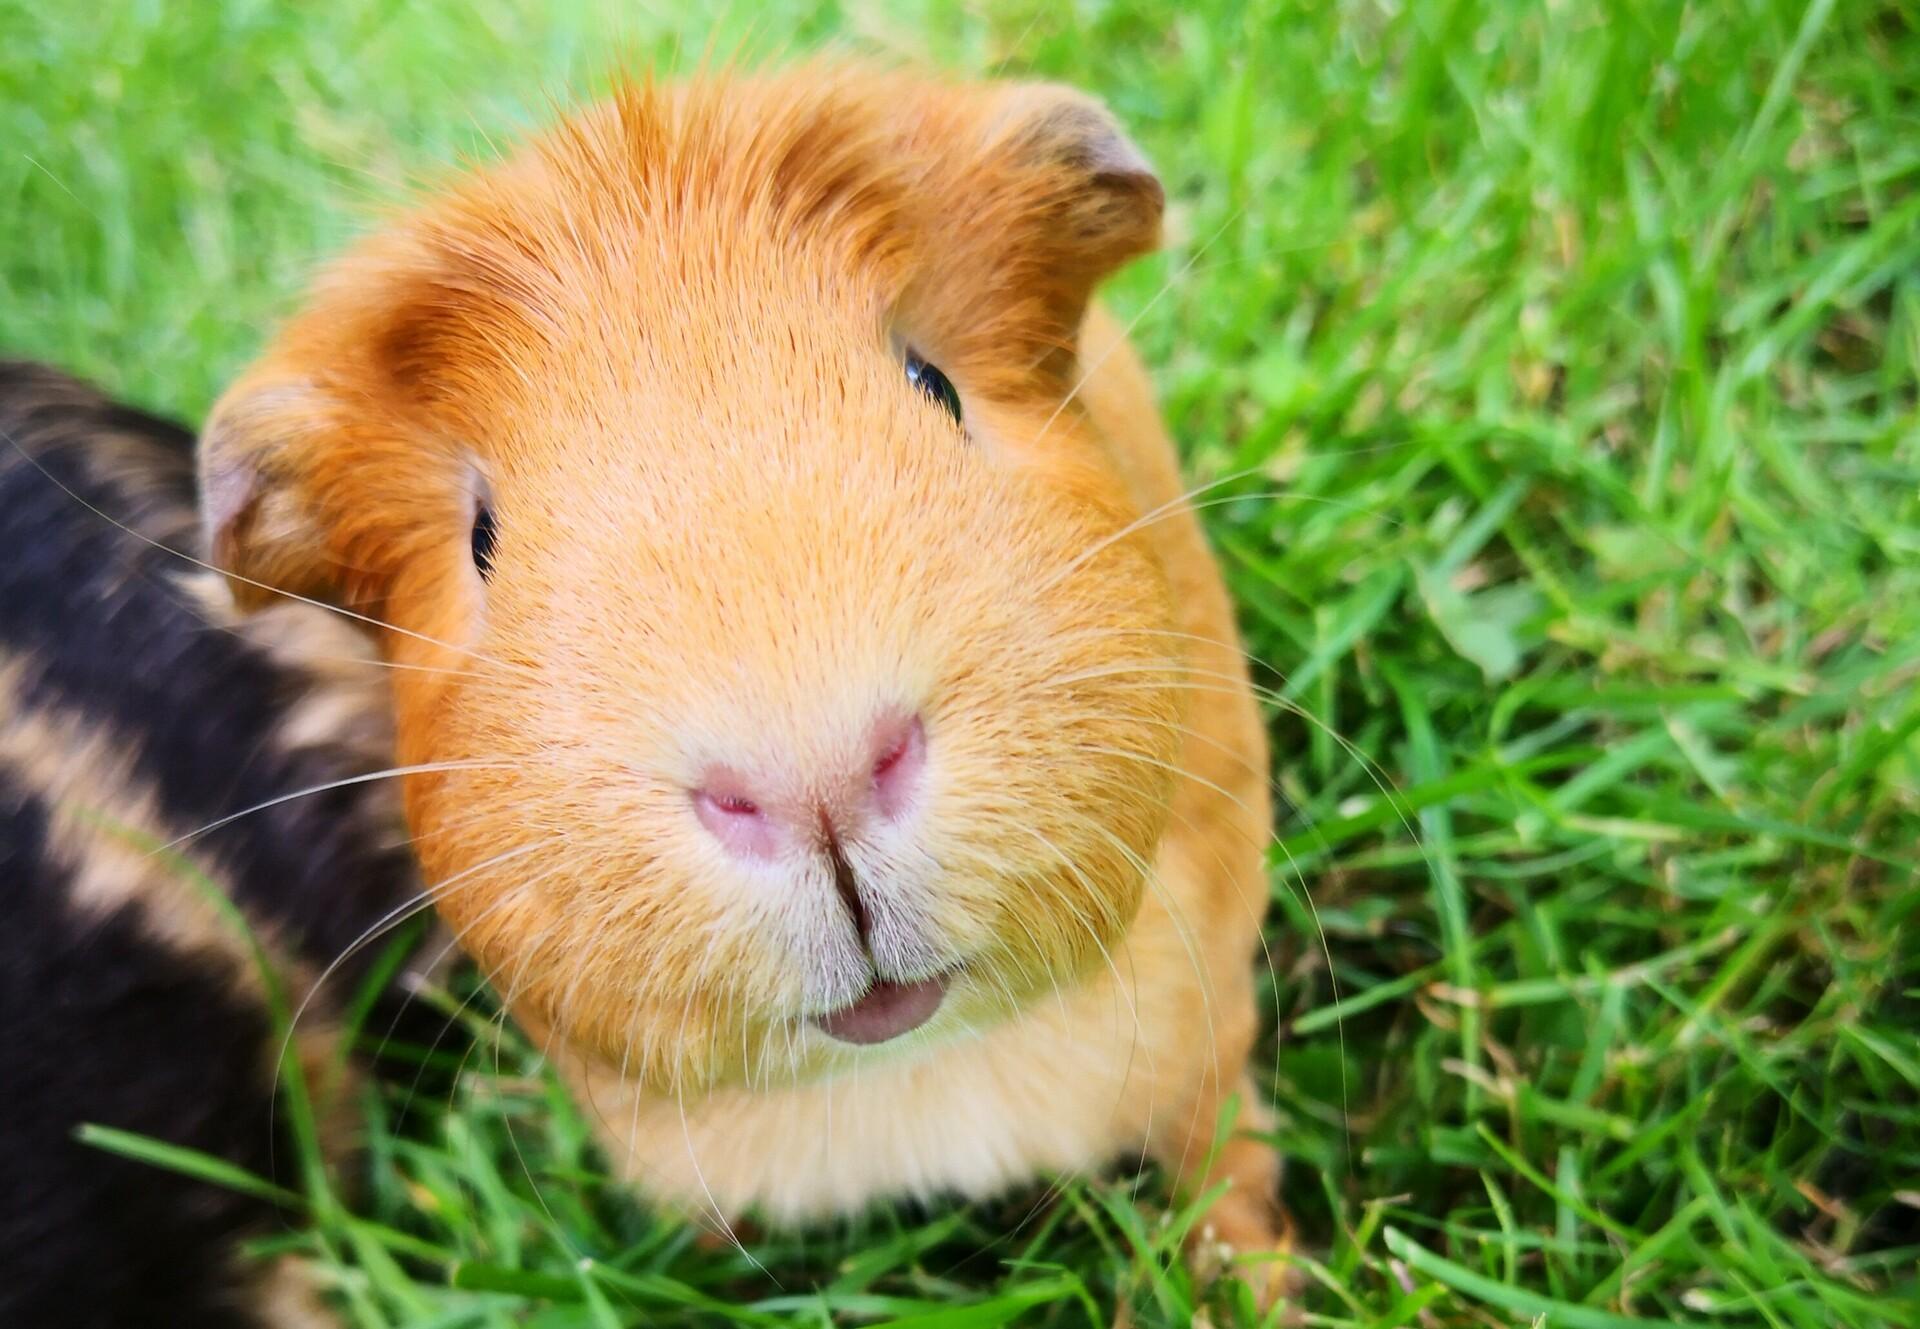 Where do guinea pigs live in South America?